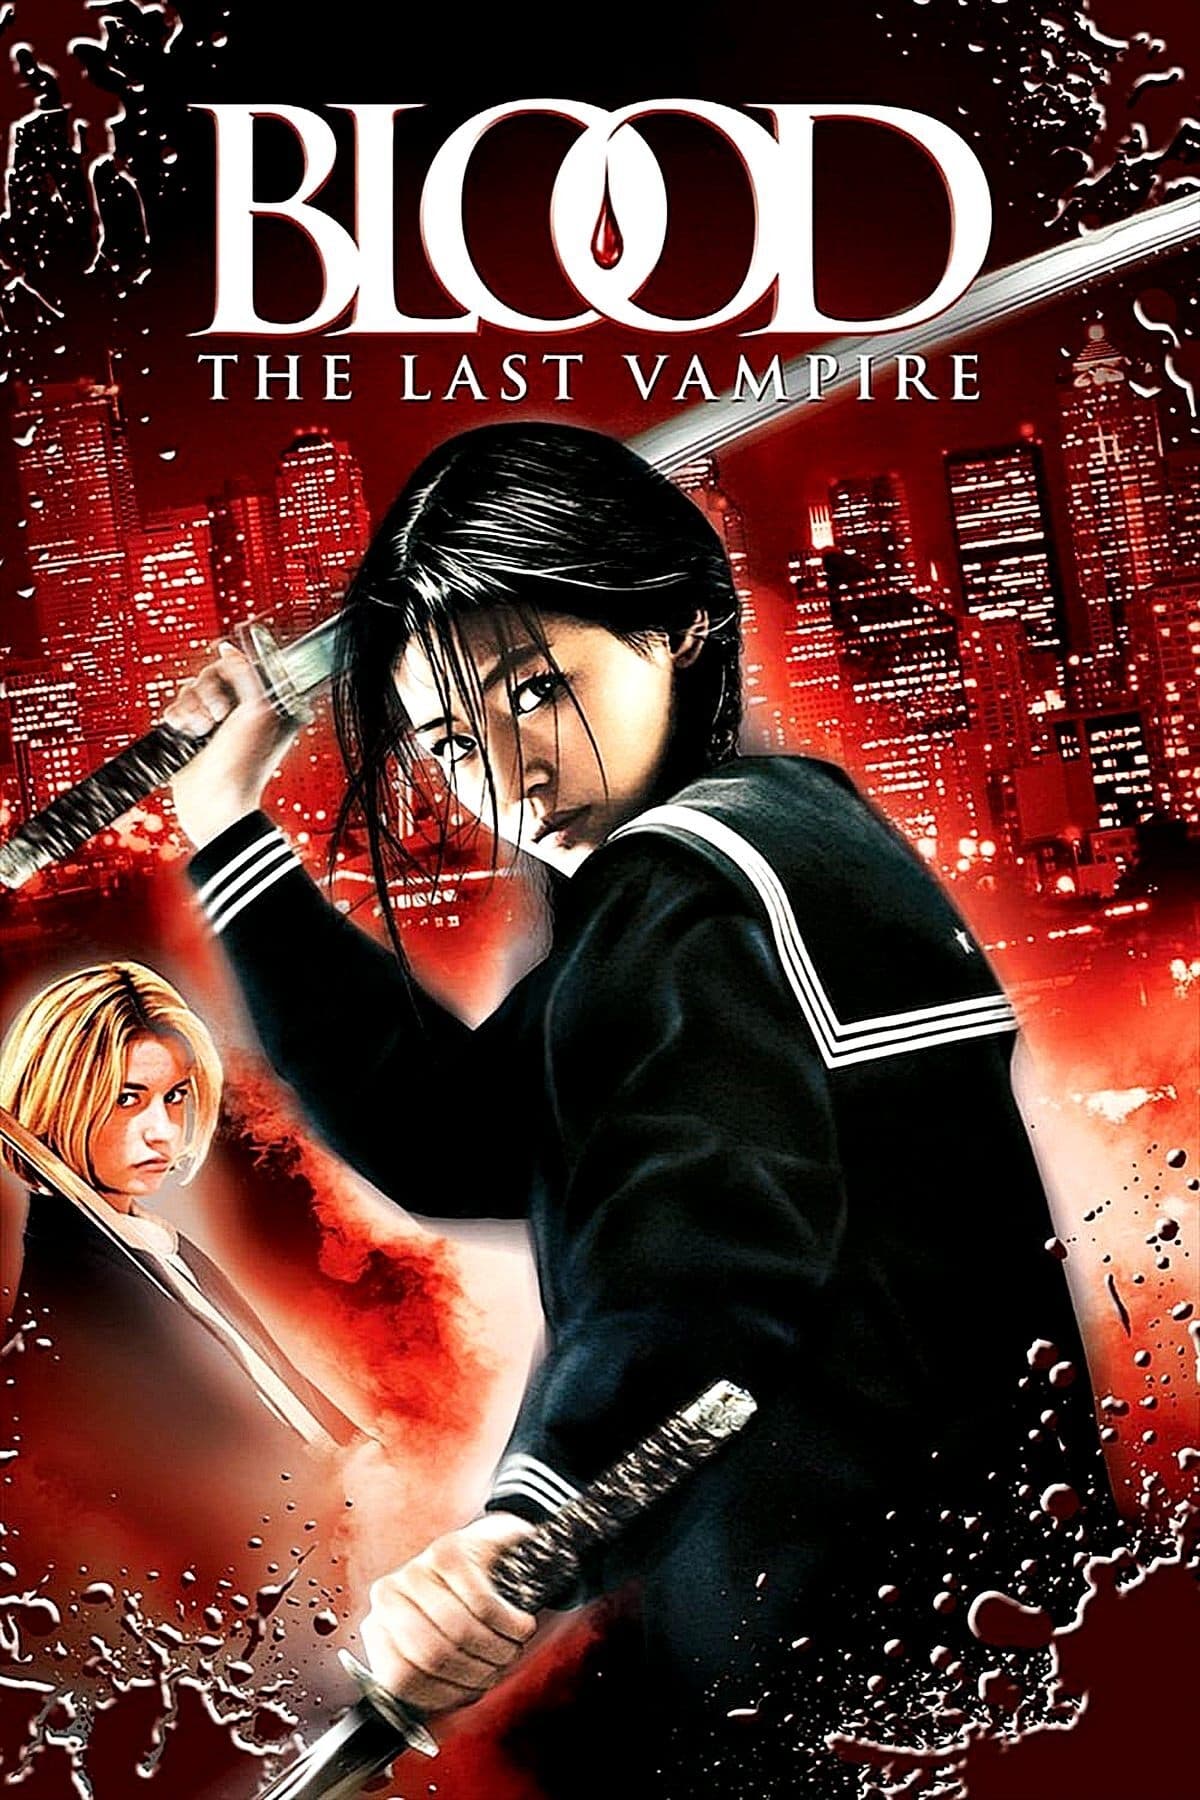 Caçadores de Vampiros (2009)